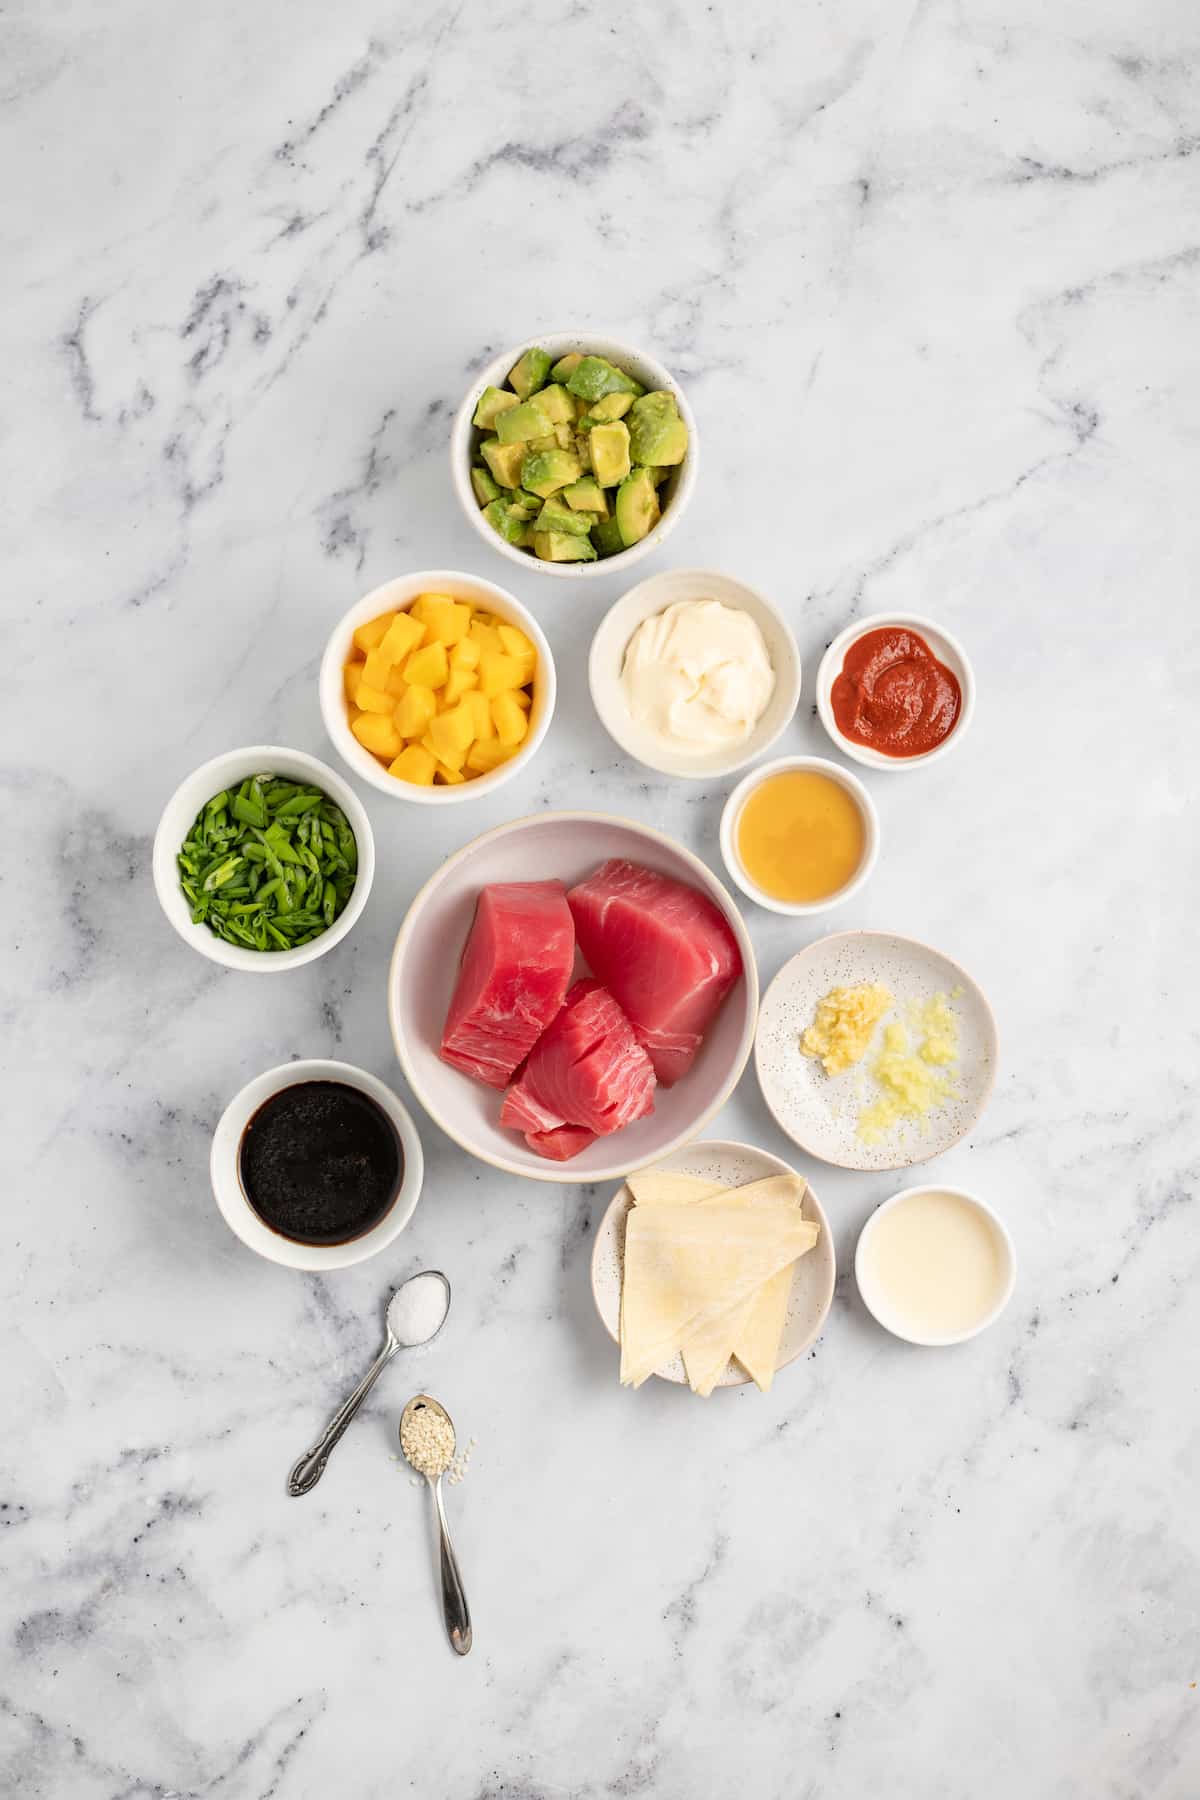 ingredients to make ahi tuna poke nachos like wontons, tuna, avocado, mango, and other seasonings